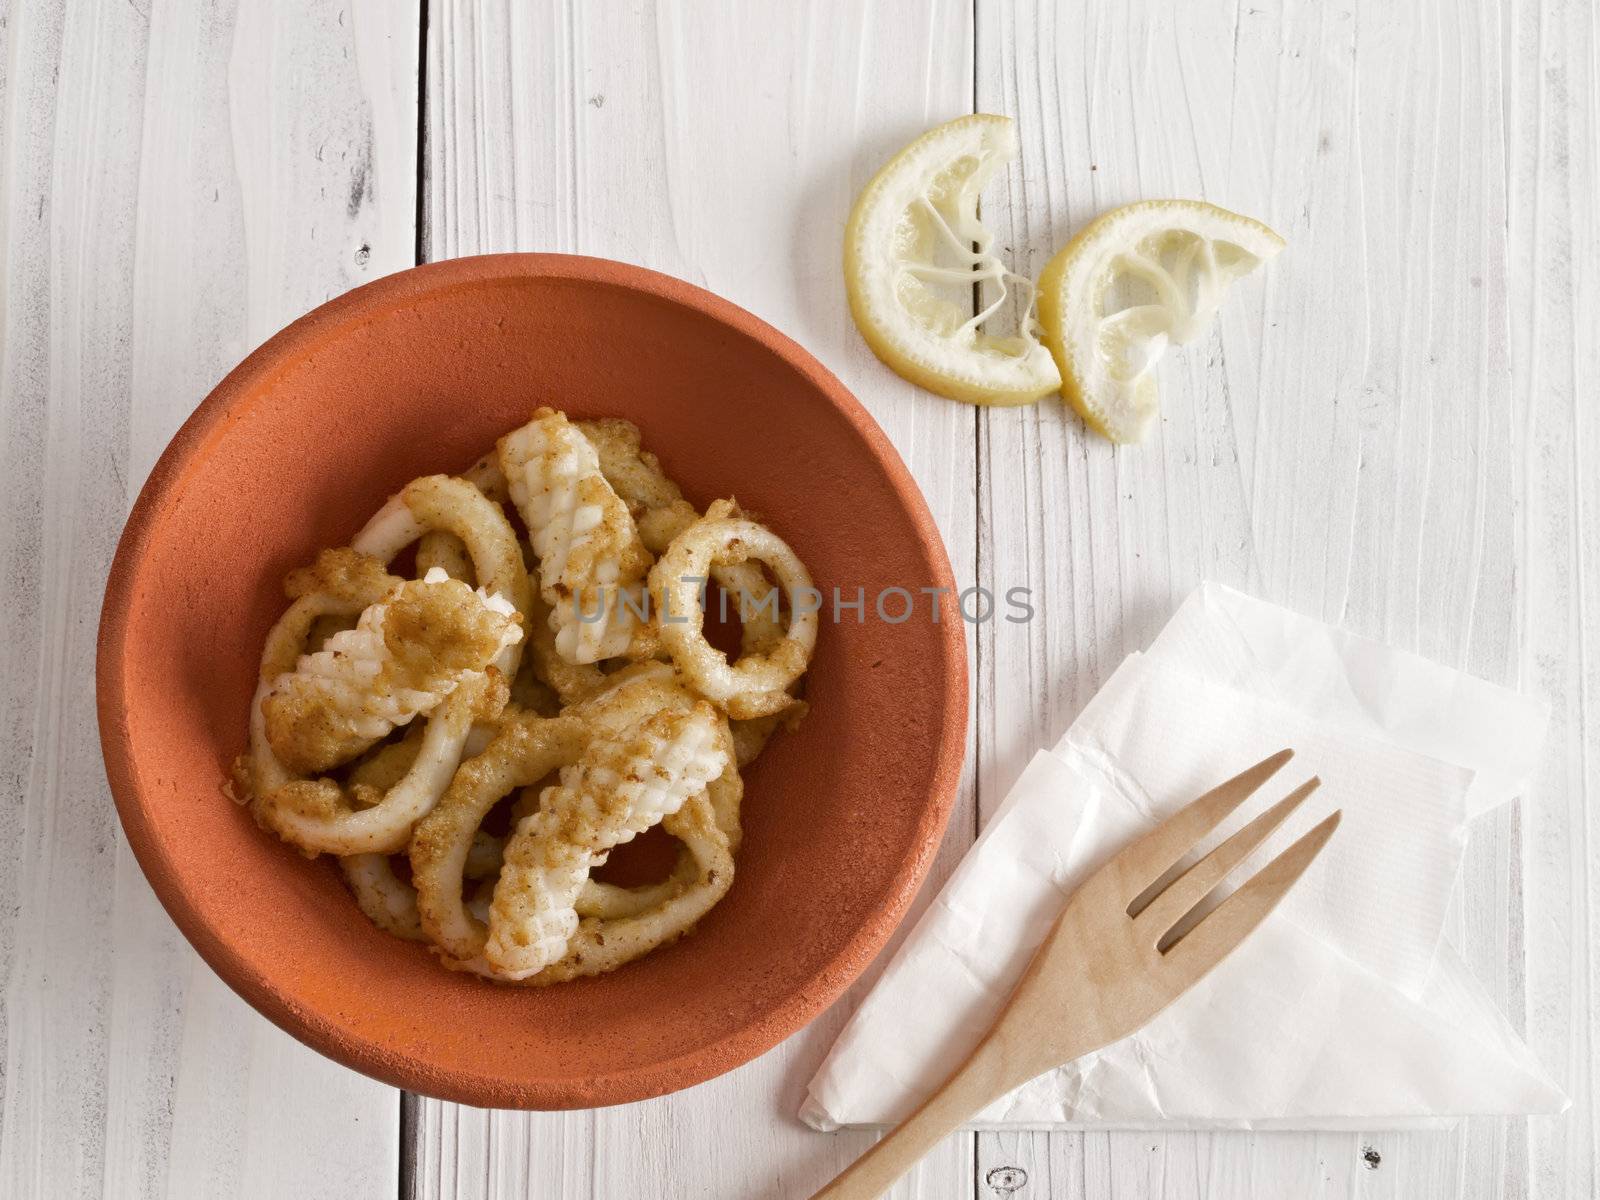 calamari fritti by zkruger